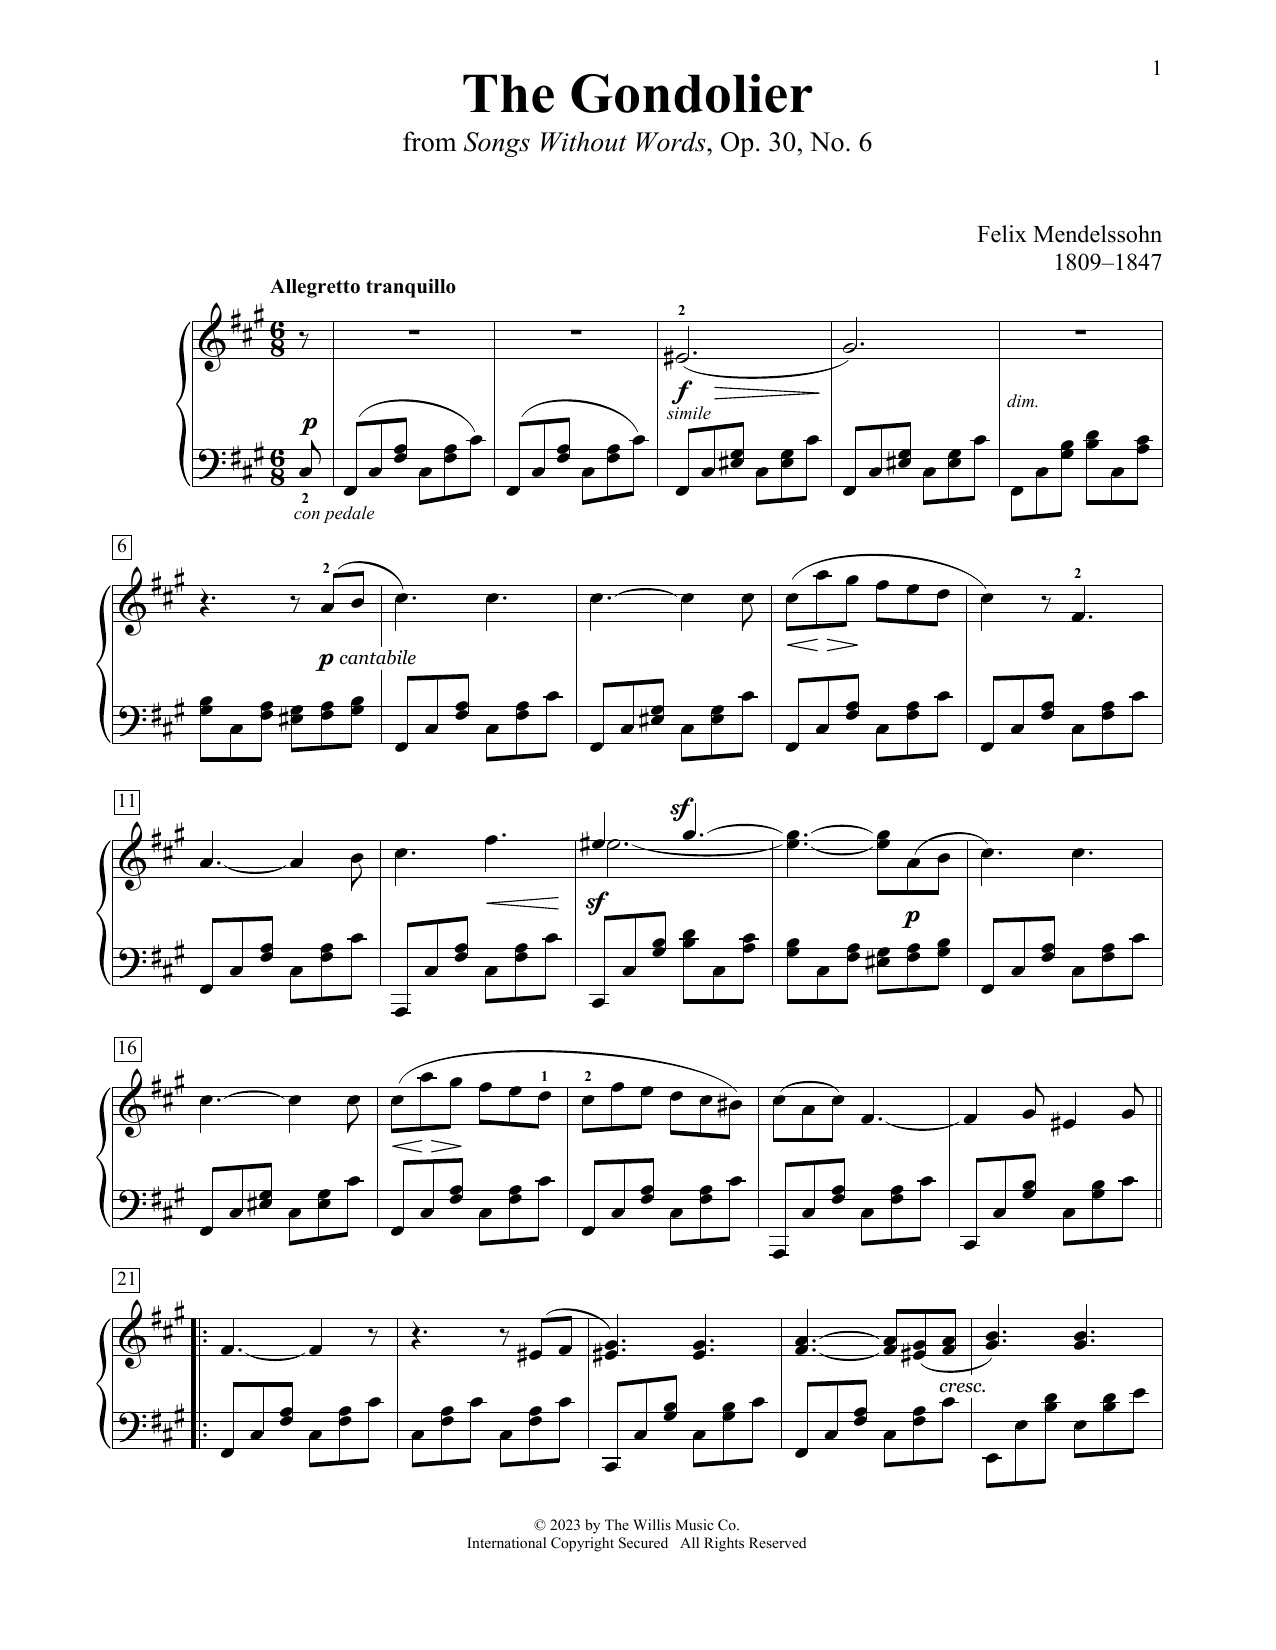 Felix Mendelssohn The Gondolier sheet music notes printable PDF score